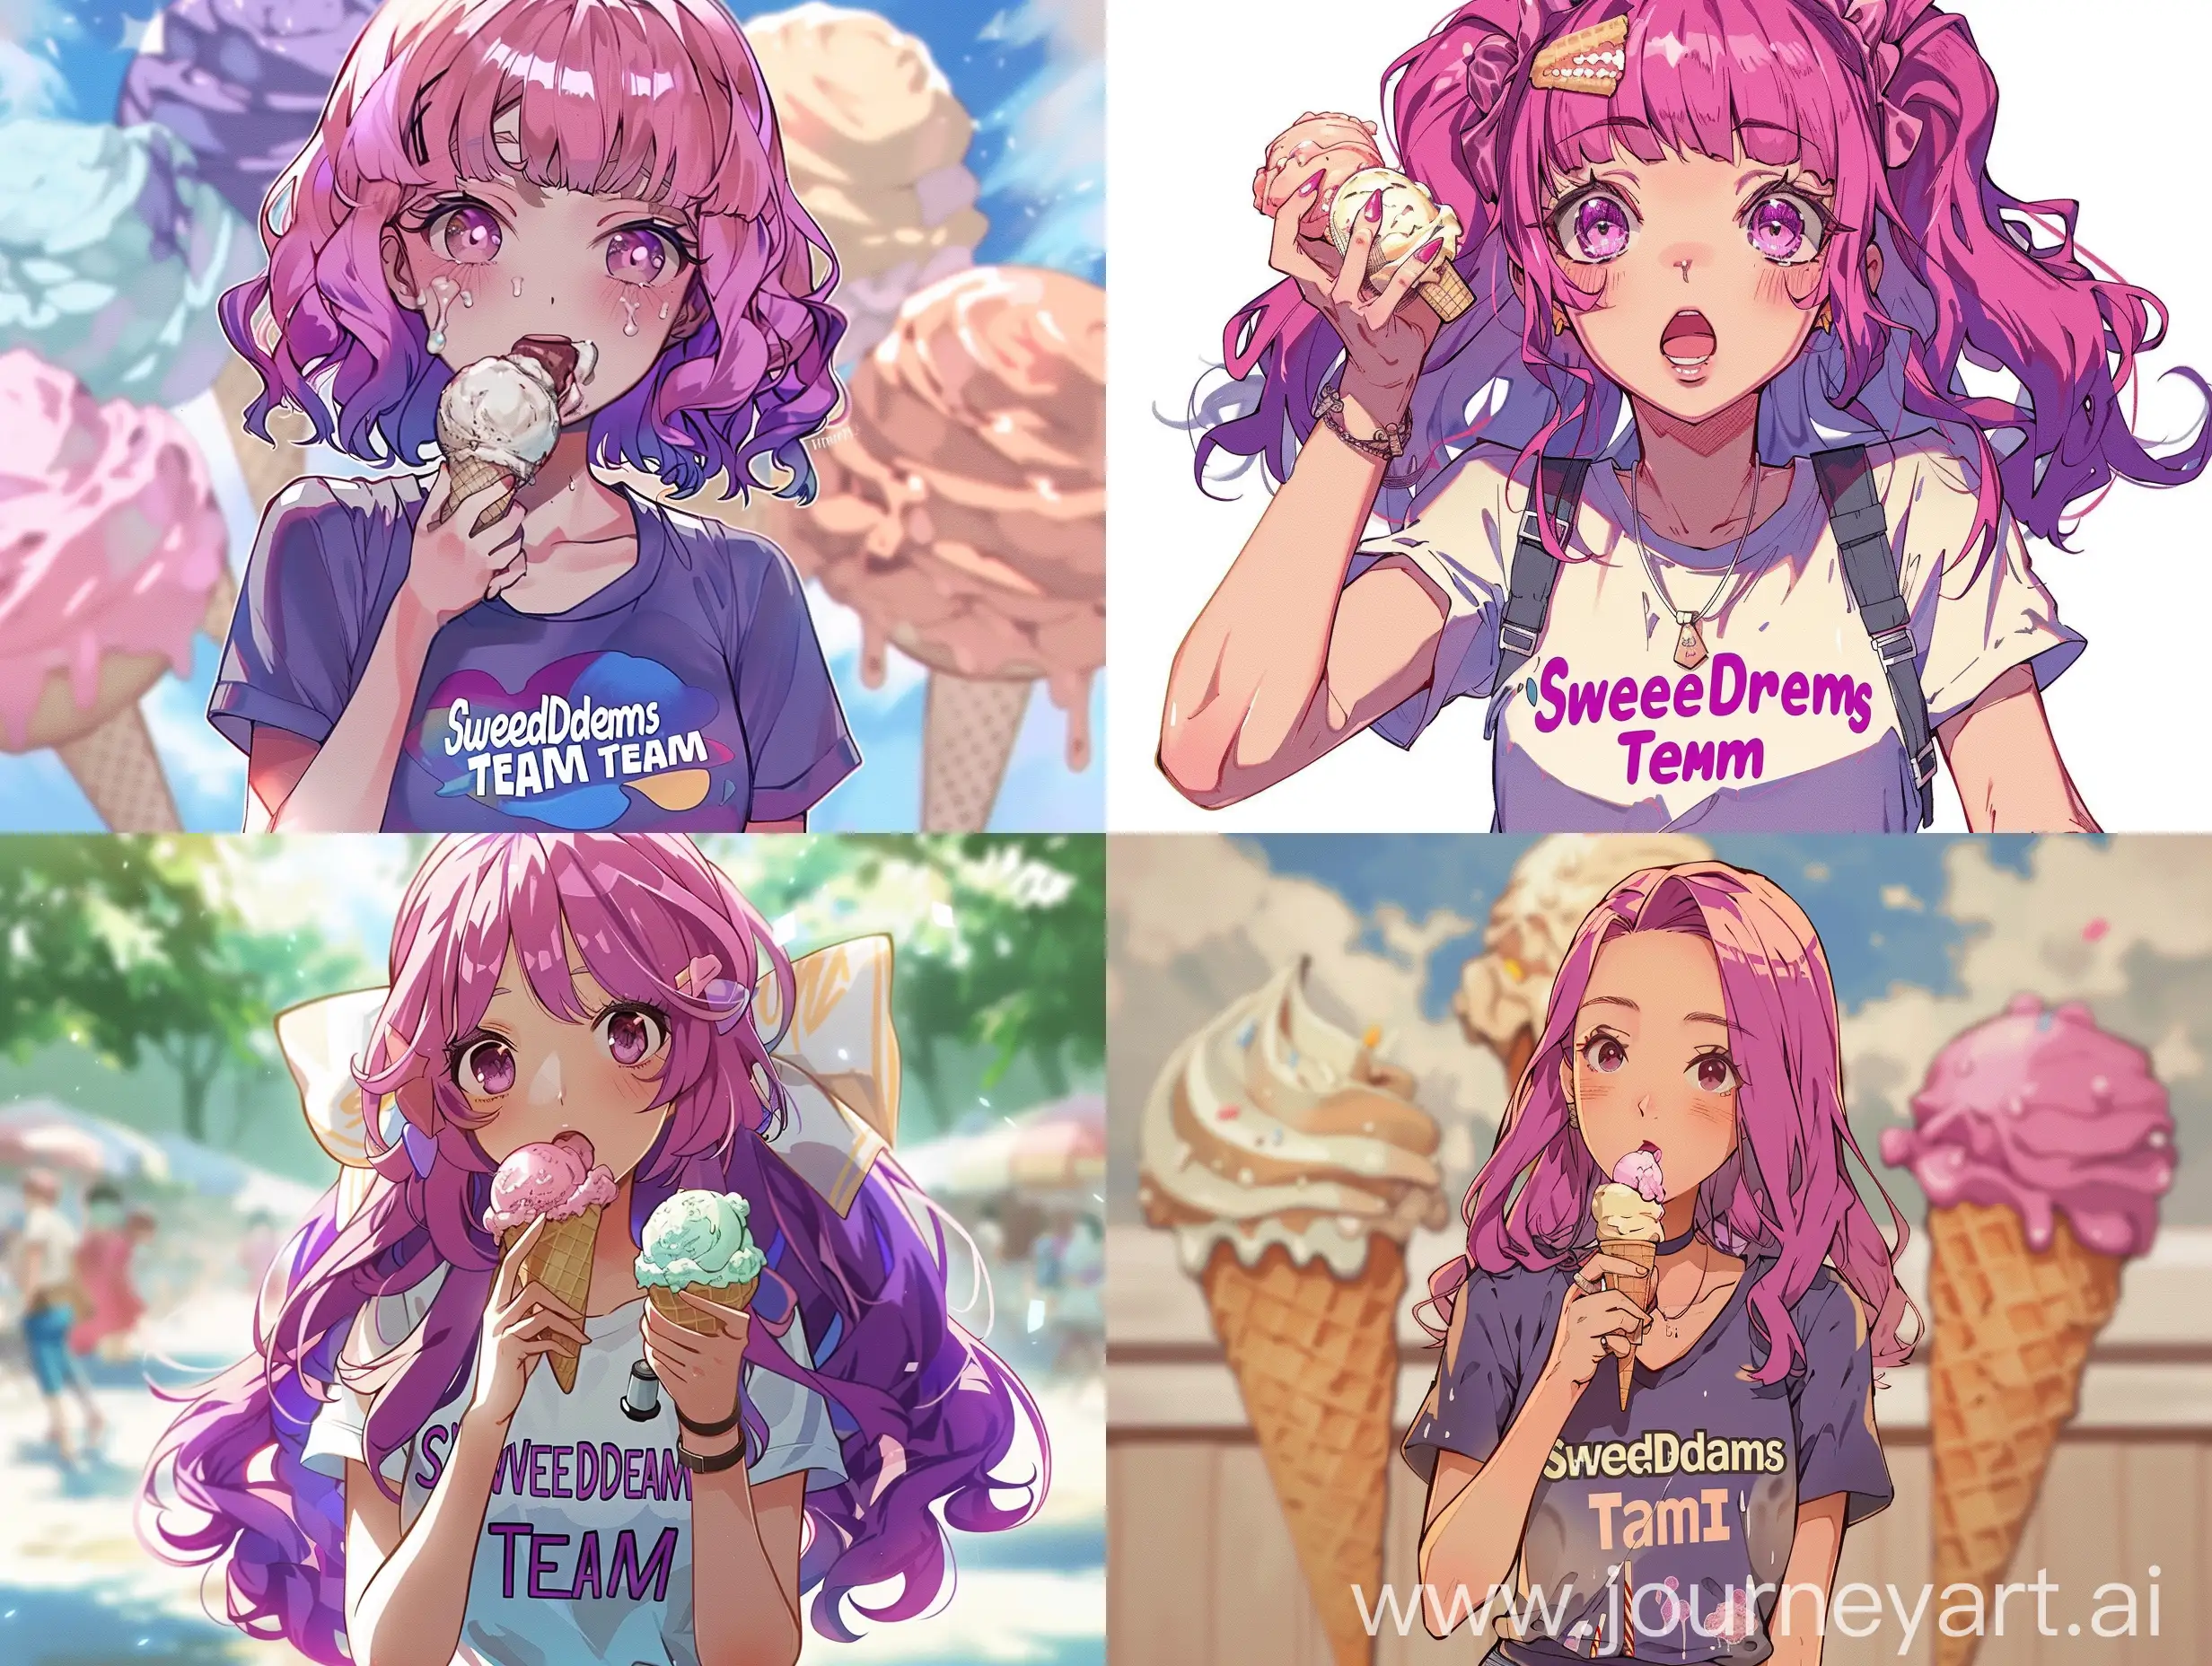 Fashionable-Anime-Girl-with-SweetDreams-Team-TShirt-Enjoying-Ice-Cream